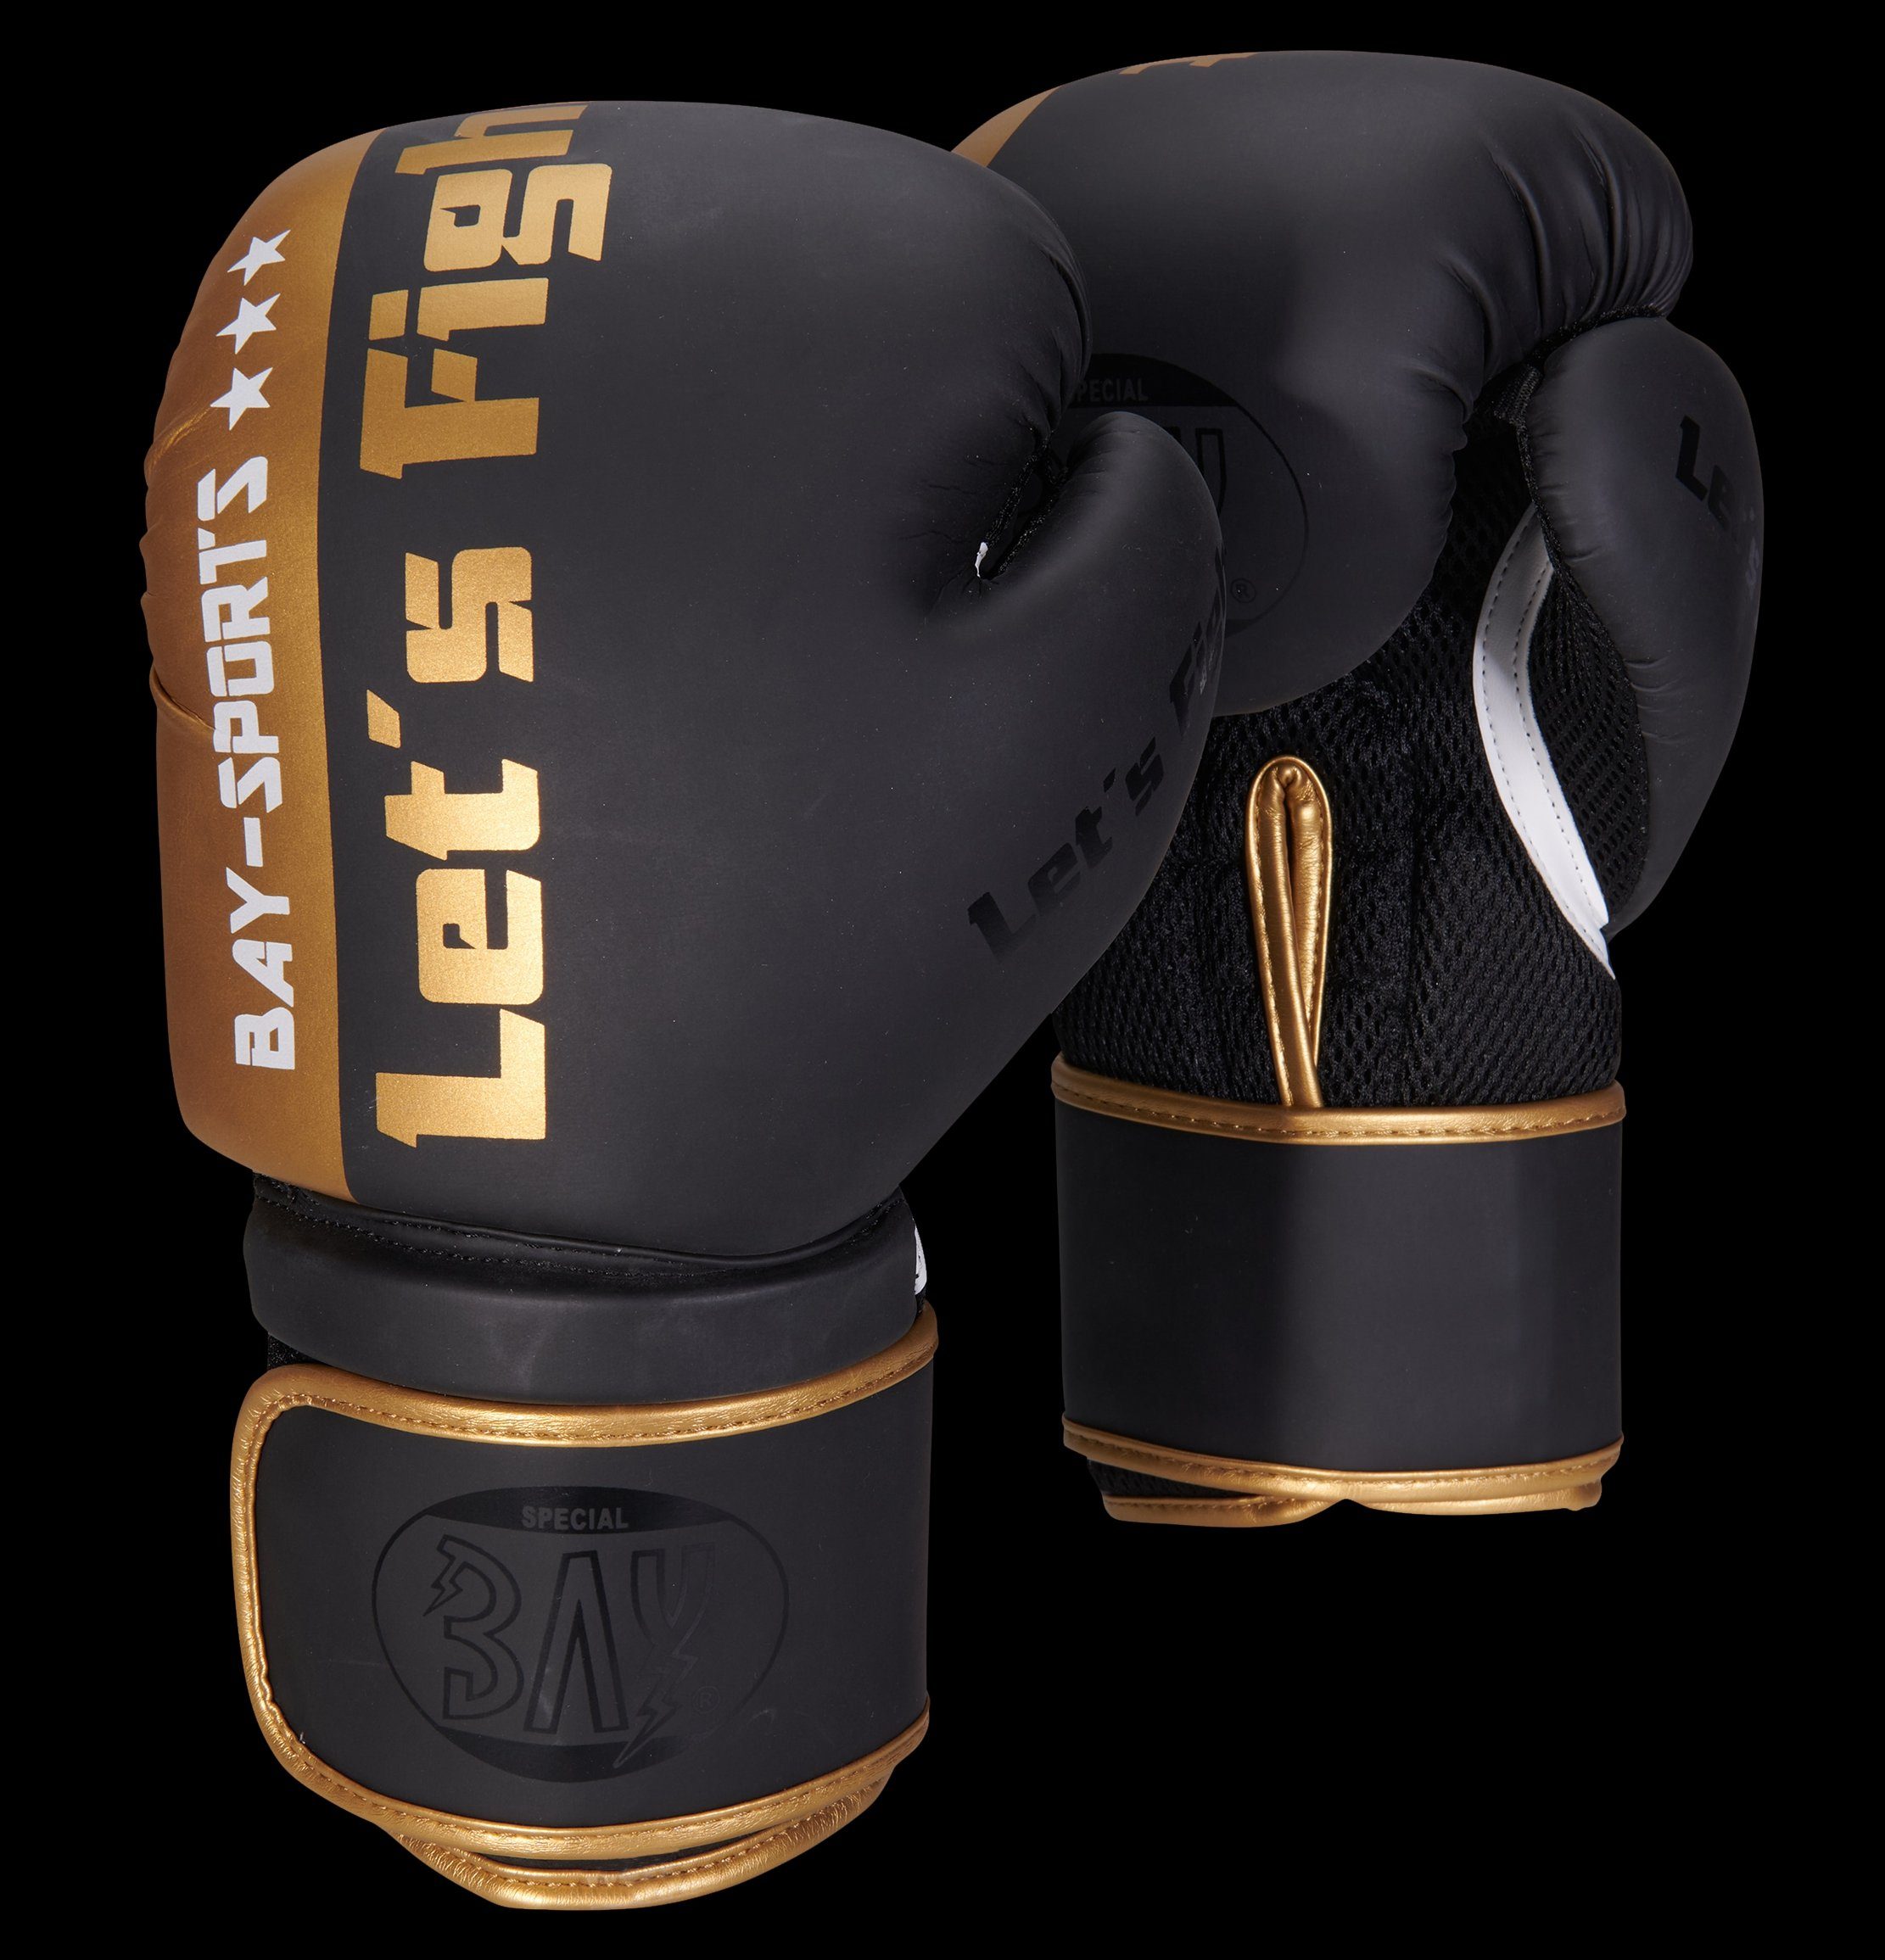 Boxen BAY-Sports Mesh Lets Fight Kickboxe Boxhandschuhe Box-Handschuhe gold